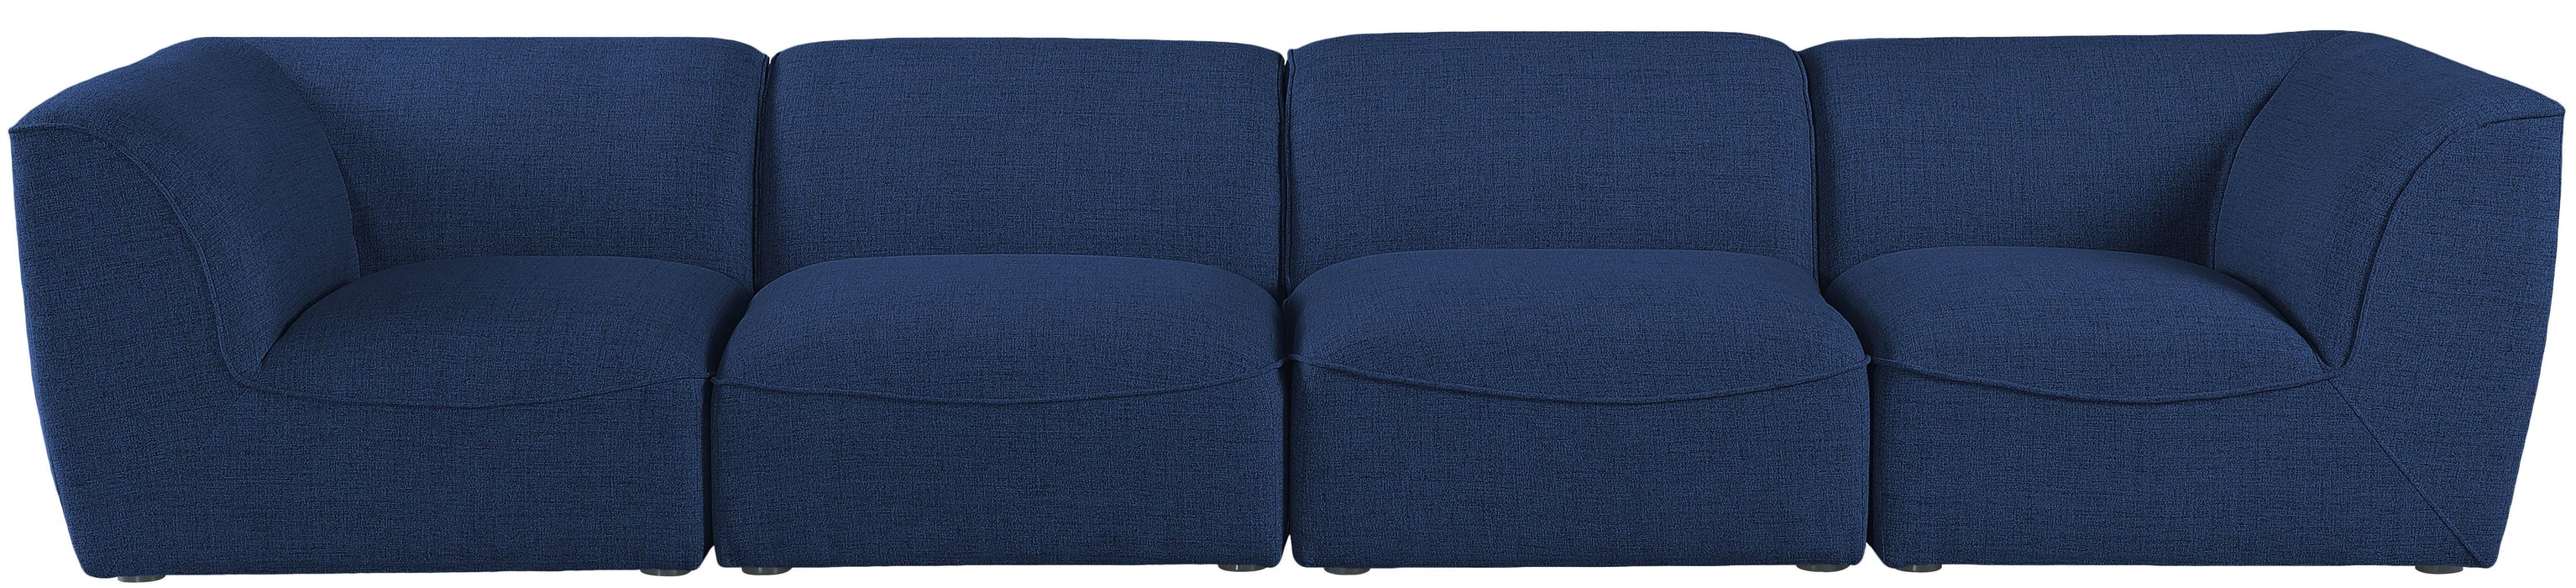 Miramar - Modular Sofa - 4 Seats